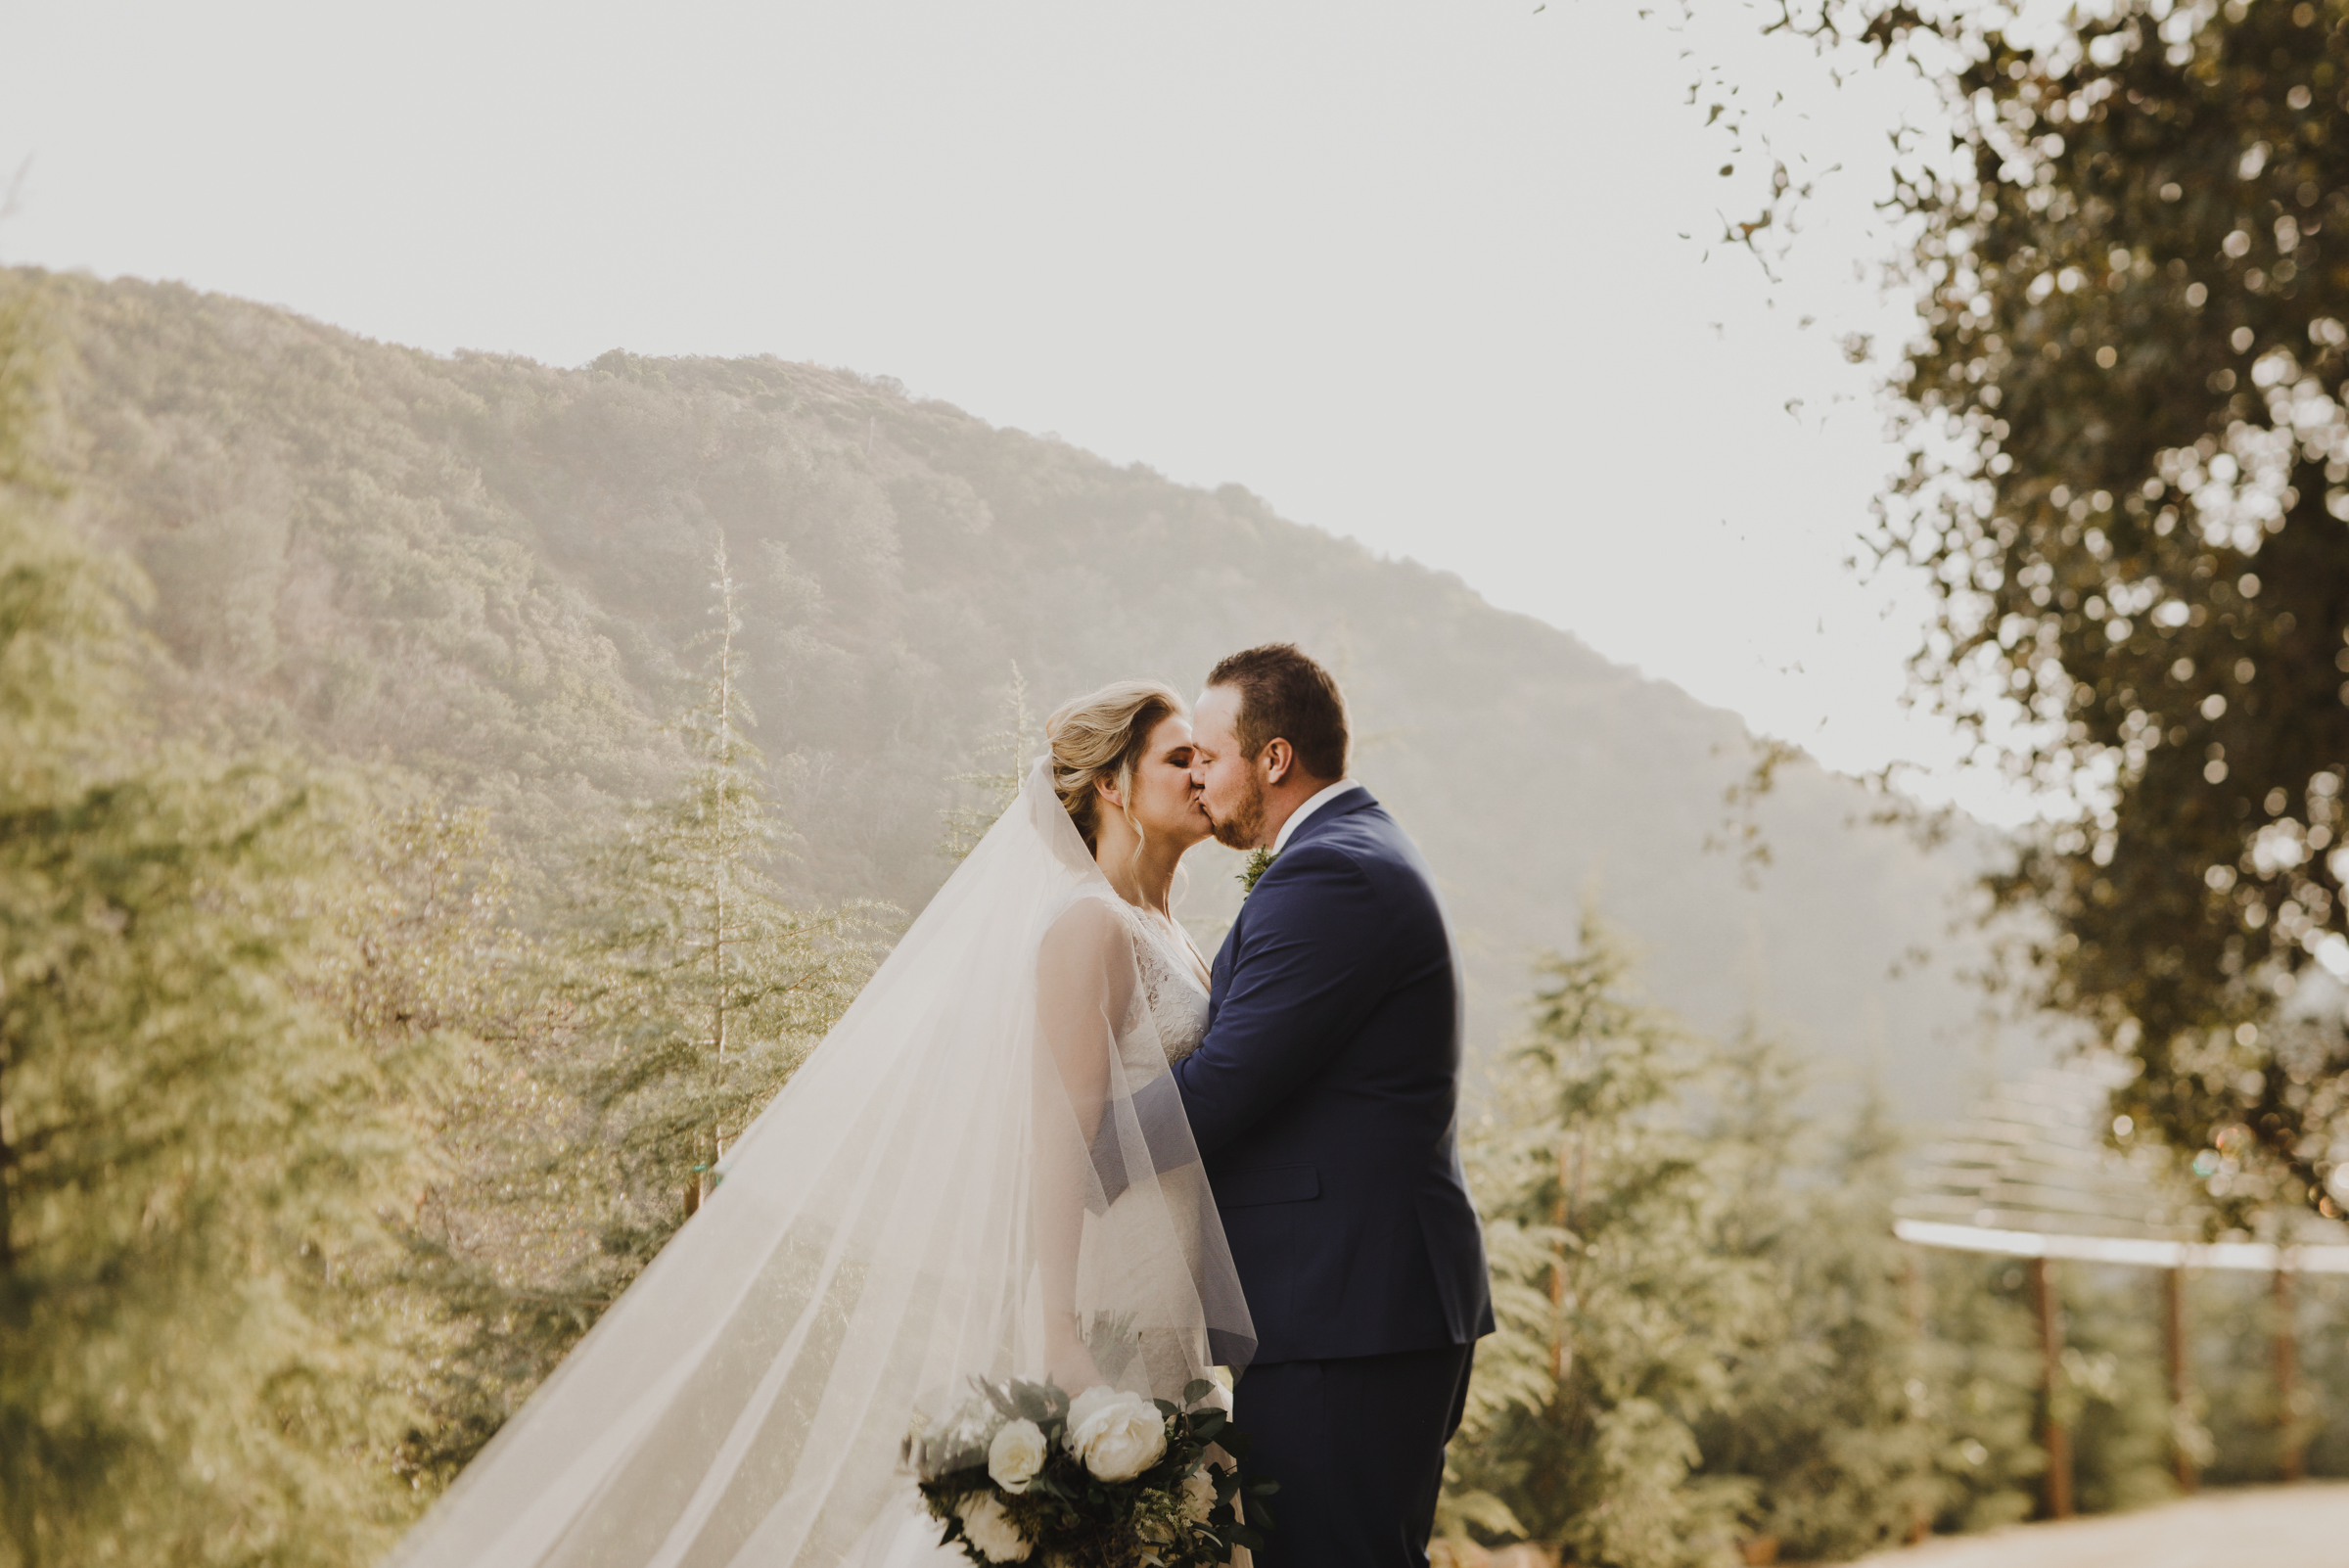 ©Isaiah + Taylor Photography - Serendipity Gardens Wedding, Oak Glen, San Bernarndino Wedding Photographer-23.jpg